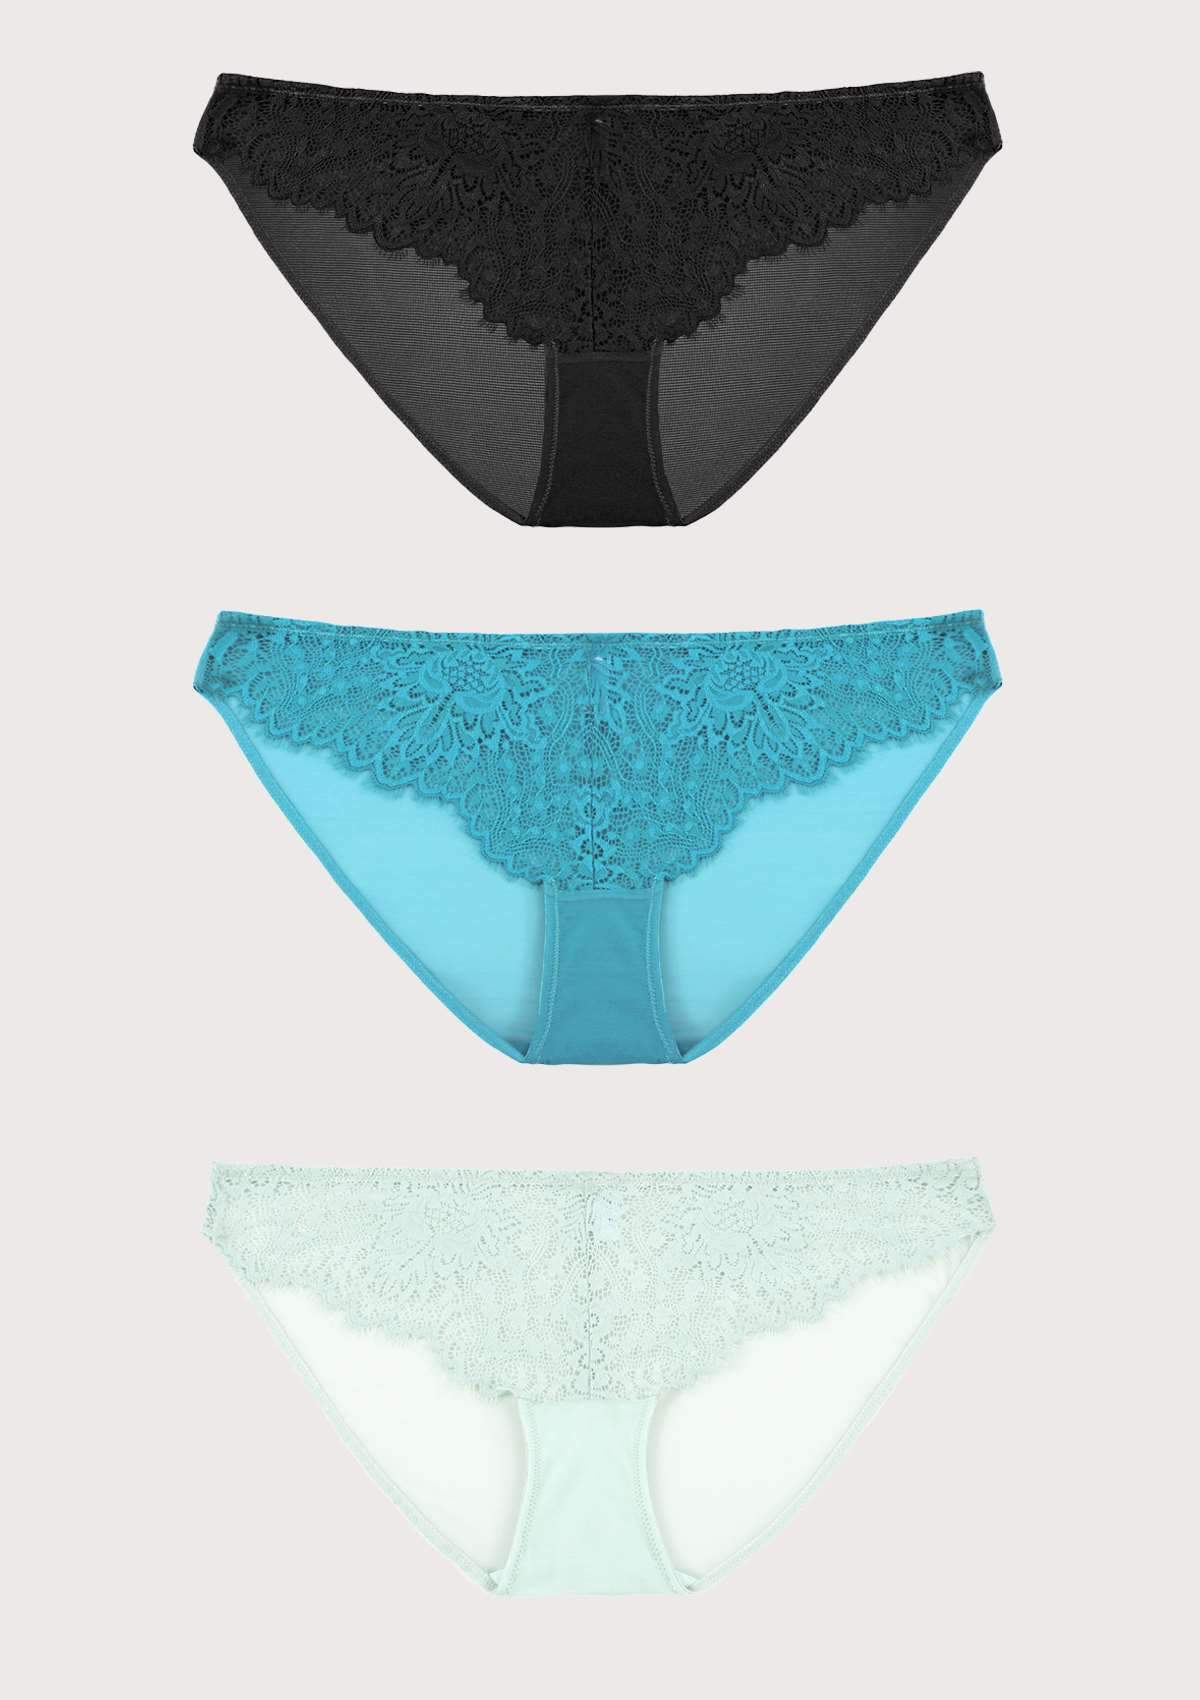 HSIA Sunflower Exquisite Lighweight Soft Lace Bikini Panties 3 Pack - S / Black+Horizon Blue+Crystal Blue